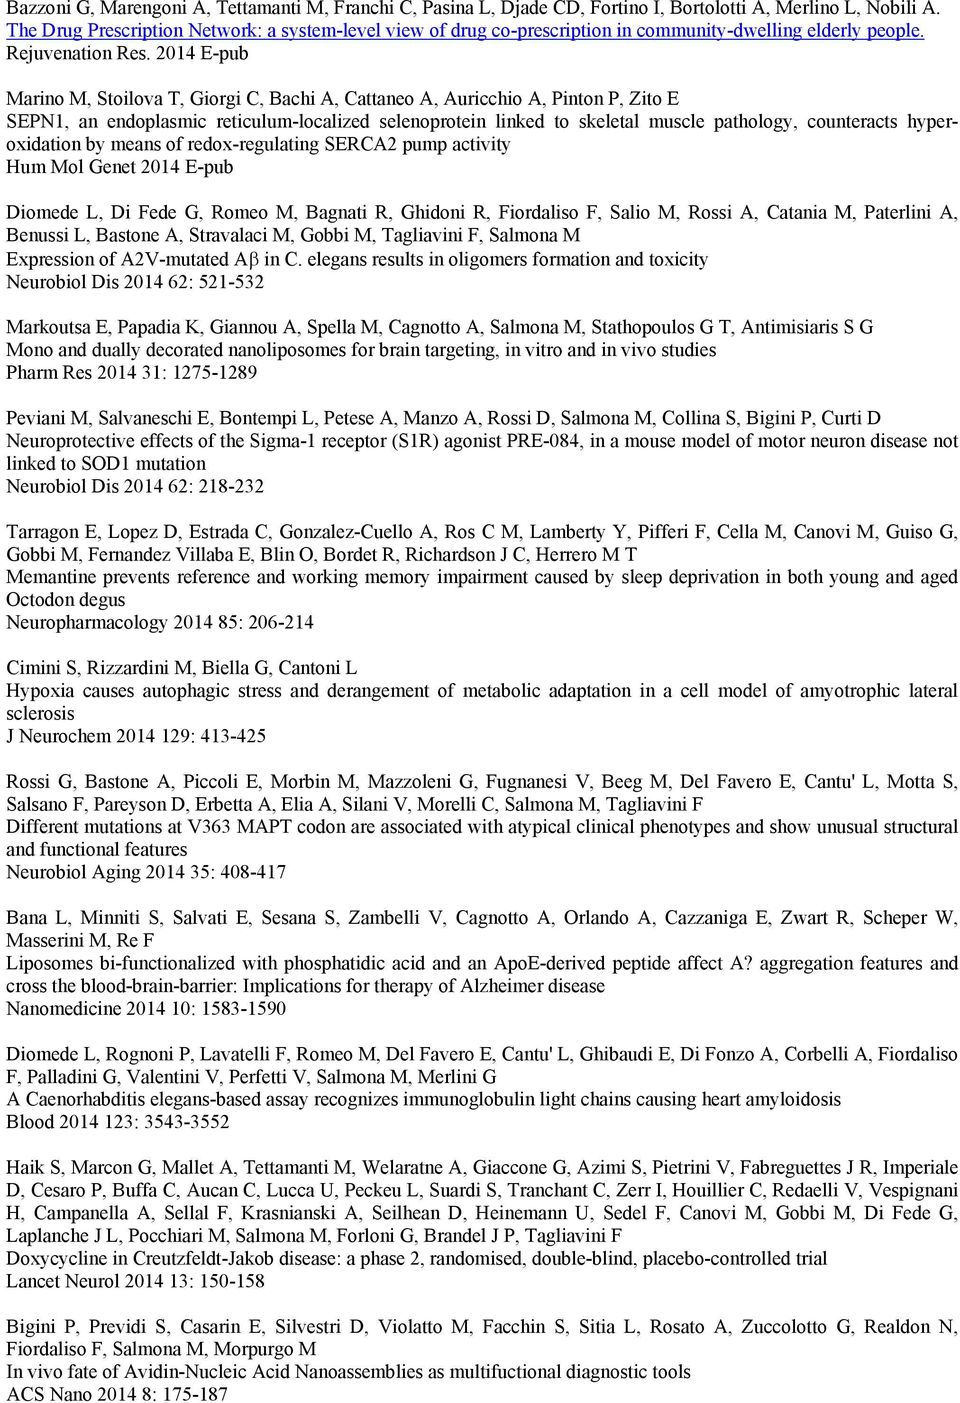 2014 E-pub Marino M, Stoilova T, Giorgi C, Bachi A, Cattaneo A, Auricchio A, Pinton P, Zito E SEPN1, an endoplasmic reticulum-localized selenoprotein linked to skeletal muscle pathology, counteracts